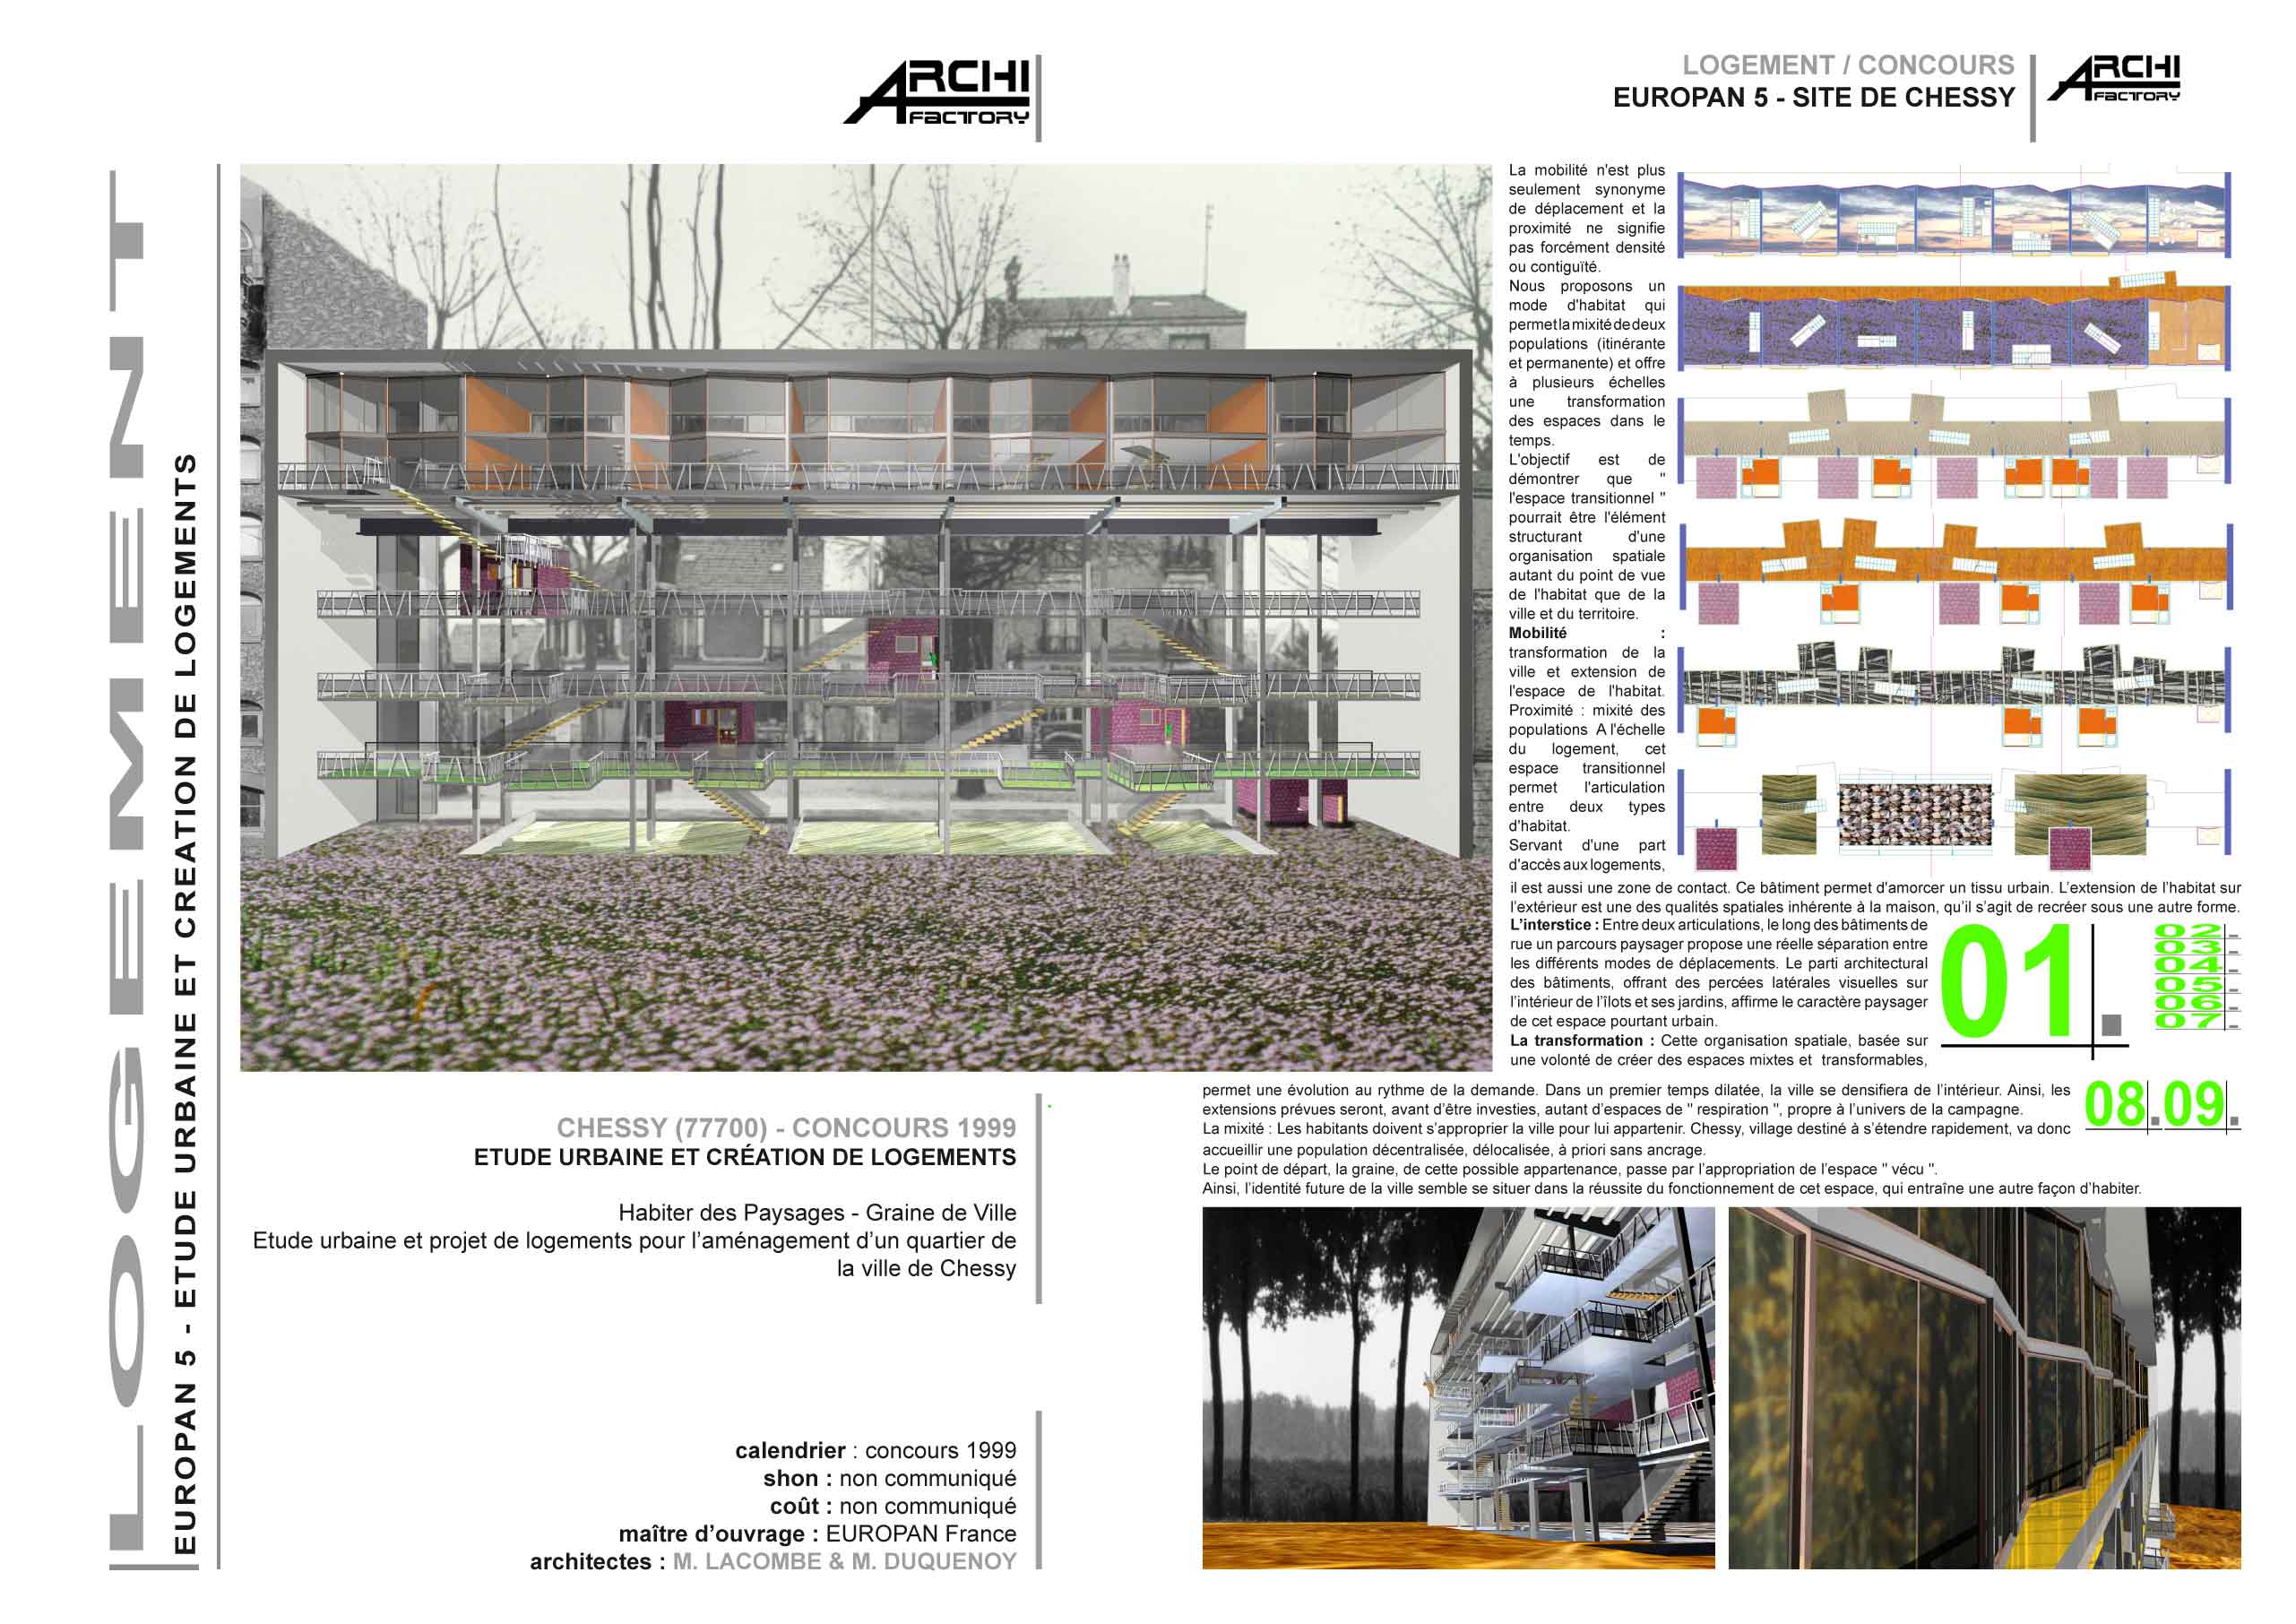 archifactory architectes - marc lacombe - europan 5